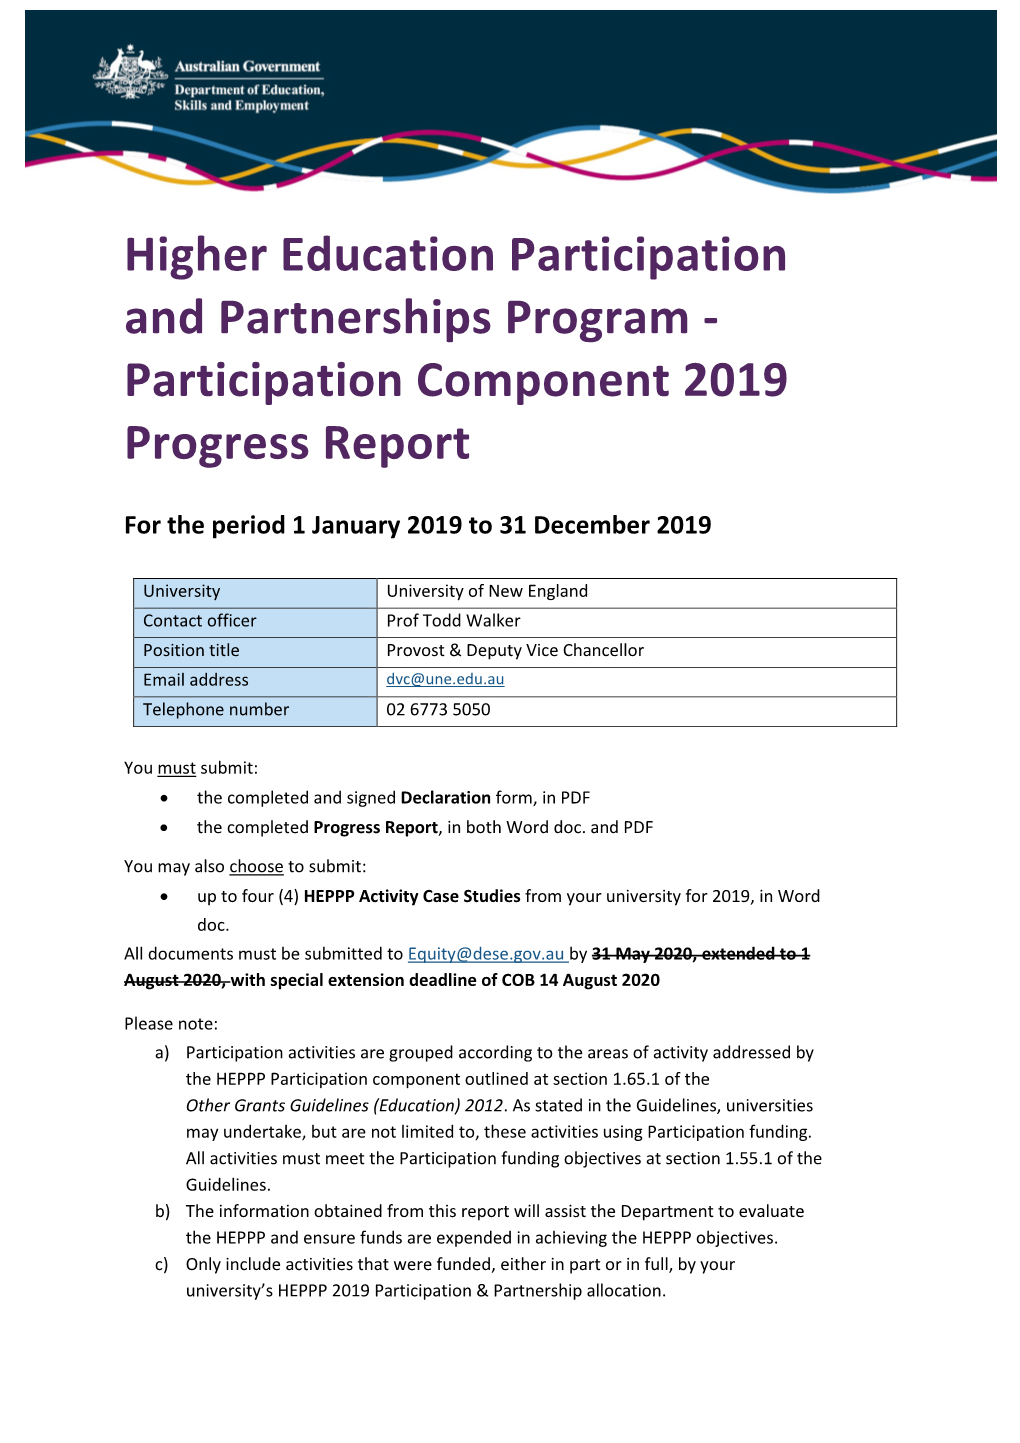 Participation Component 2019 Progress Report